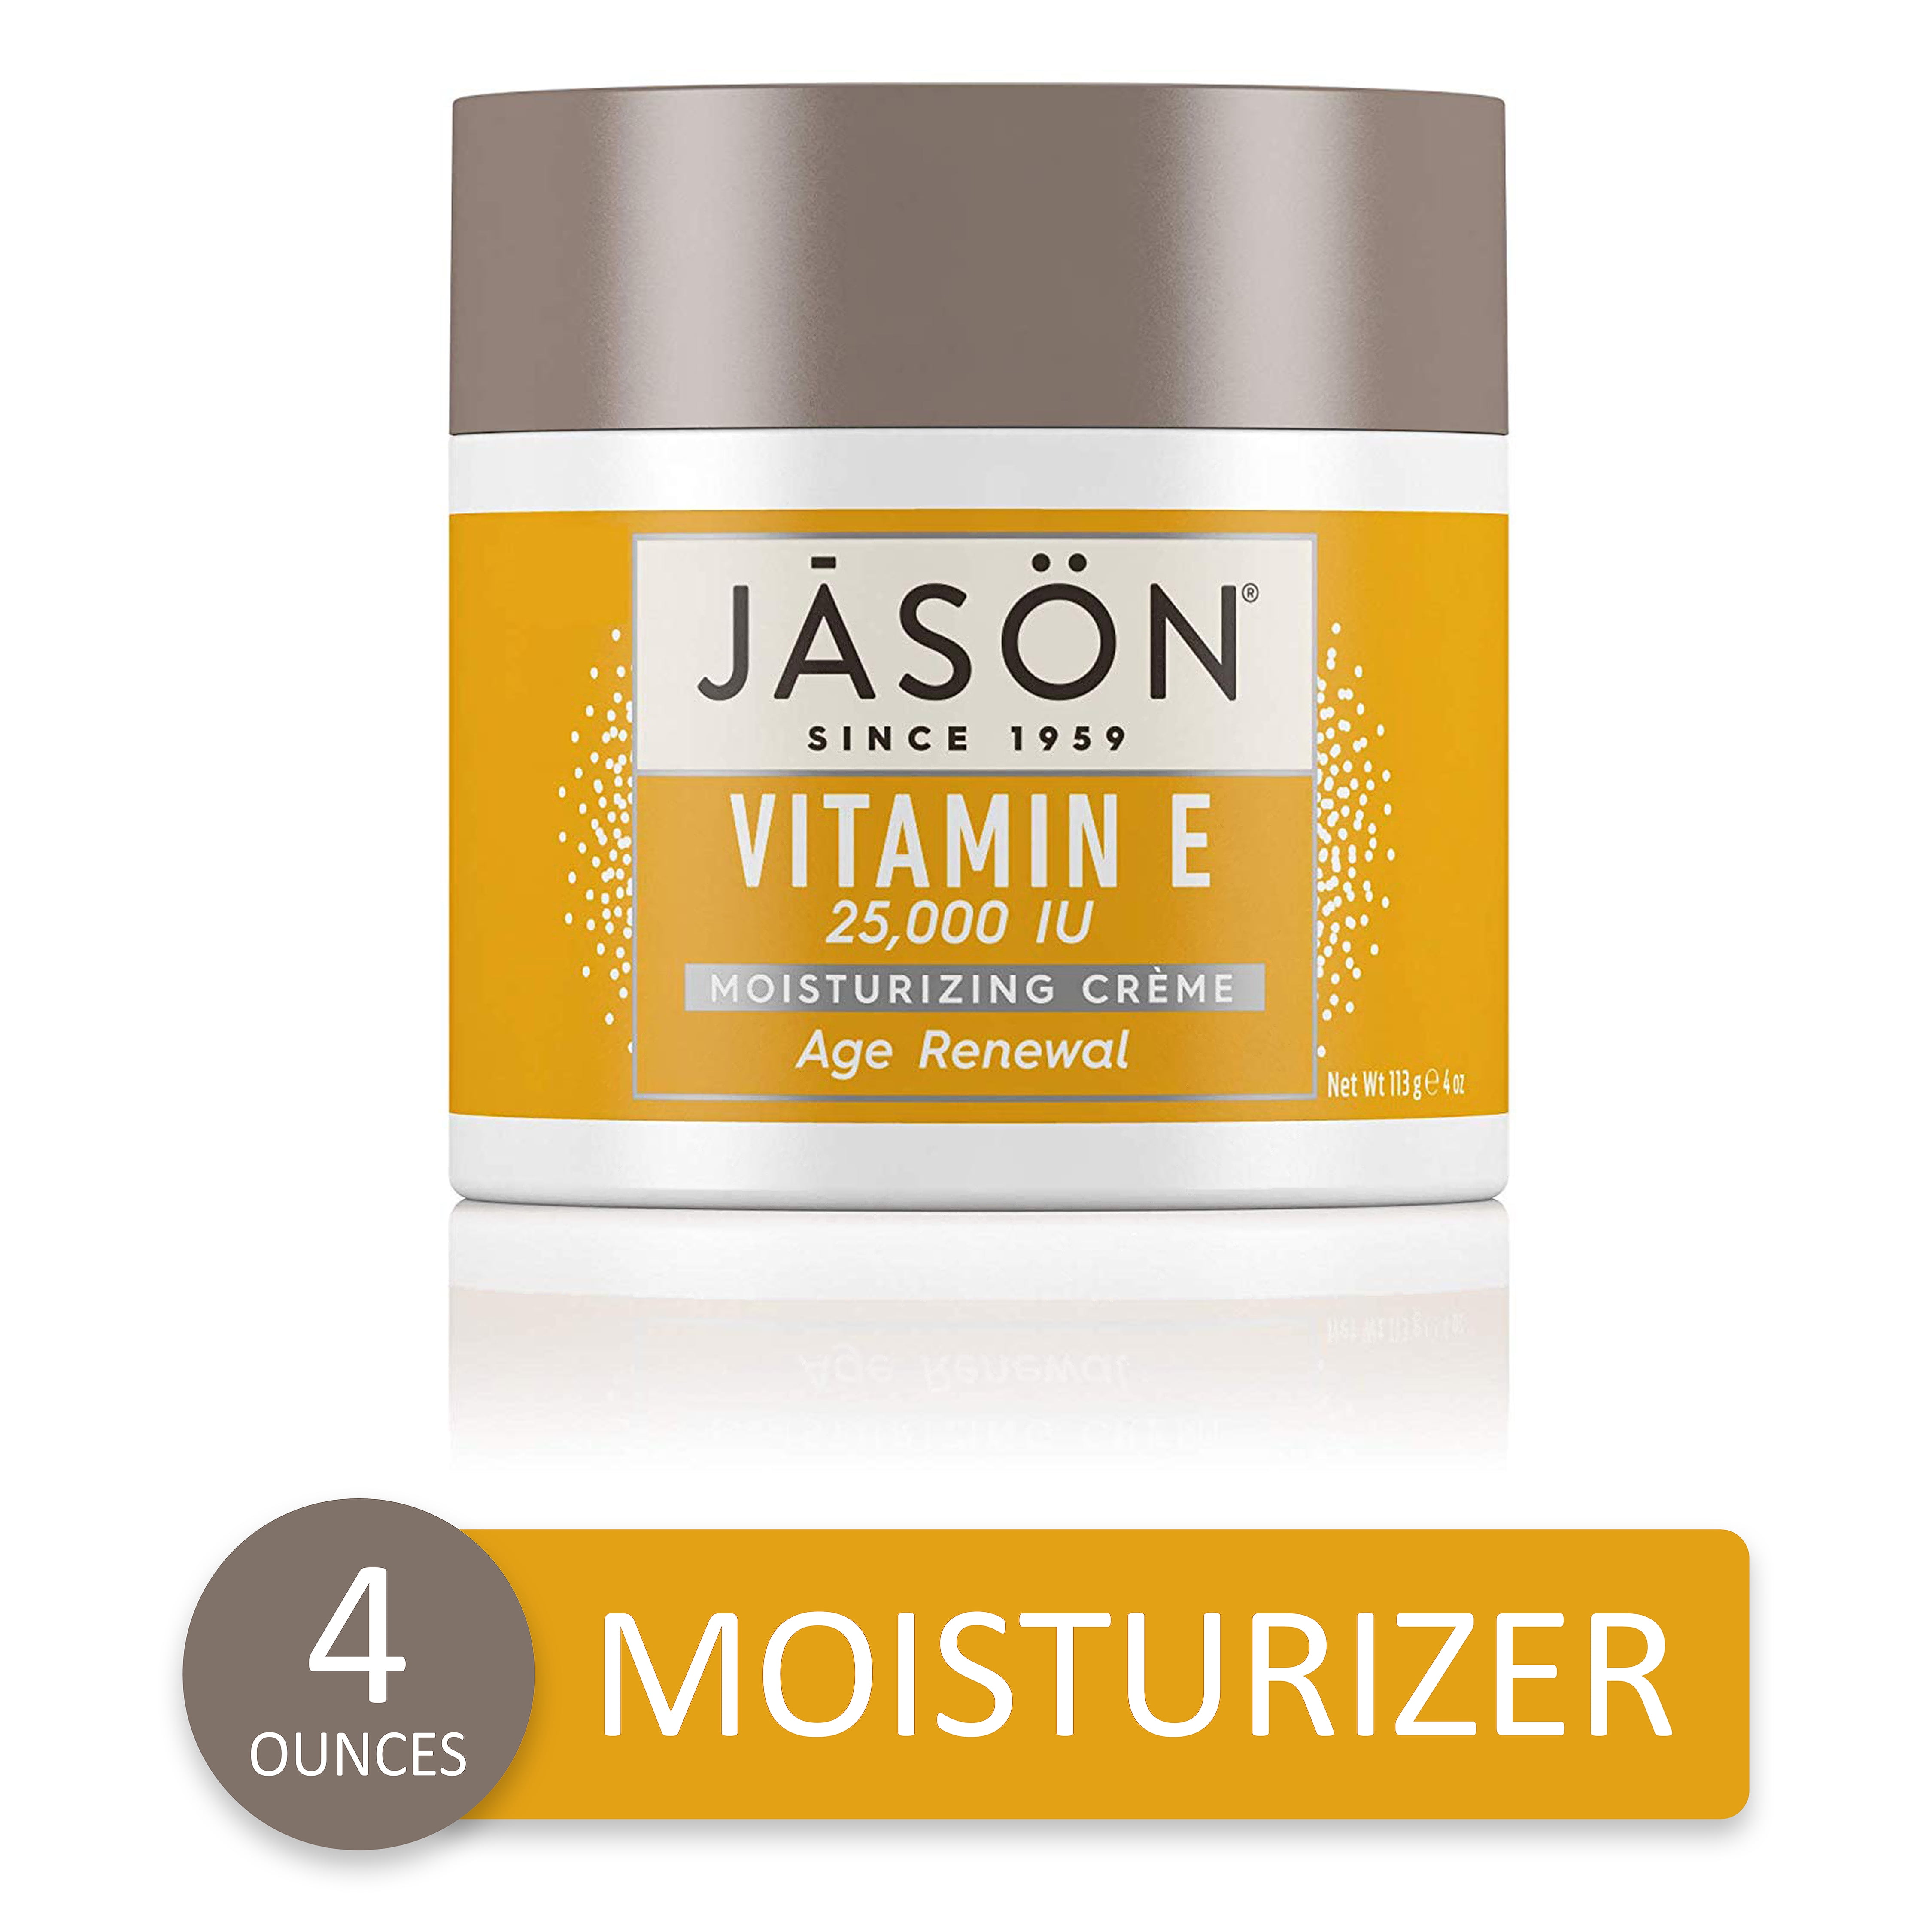 Jason Vitamin E 25,000 IU Age Renewal Moisturizing Creme, 4 oz